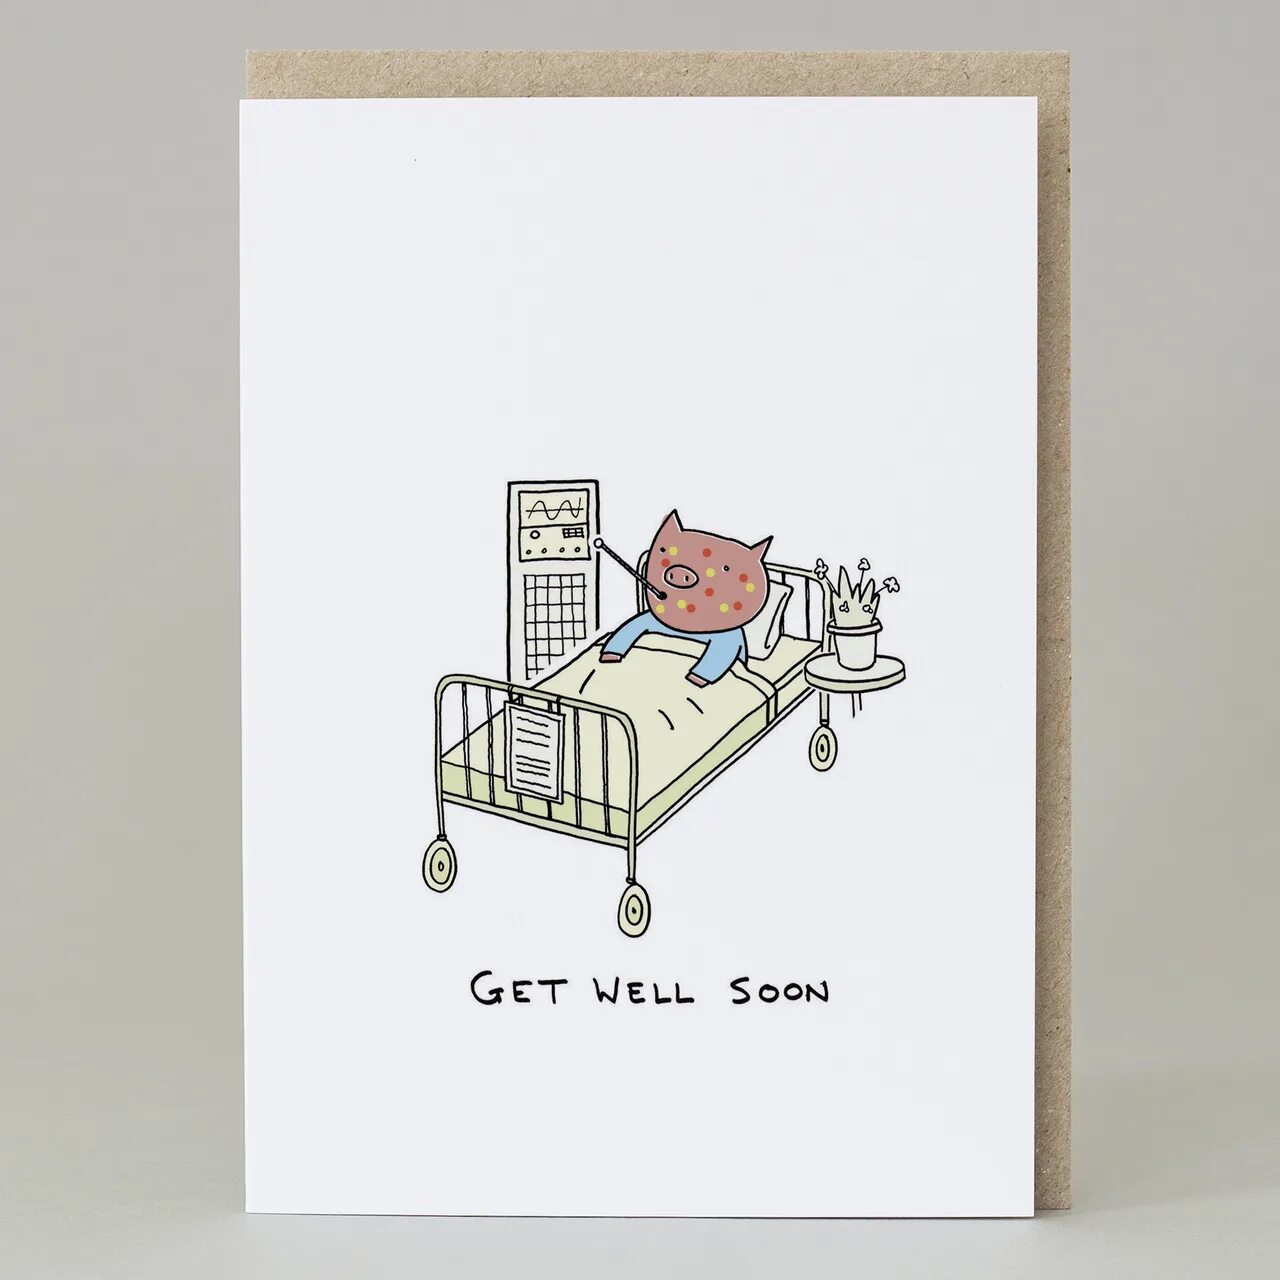 Get better or get well. Get well soon картинки. Плакат get well. Get well открытка. Открытка get well soon с кроликом.